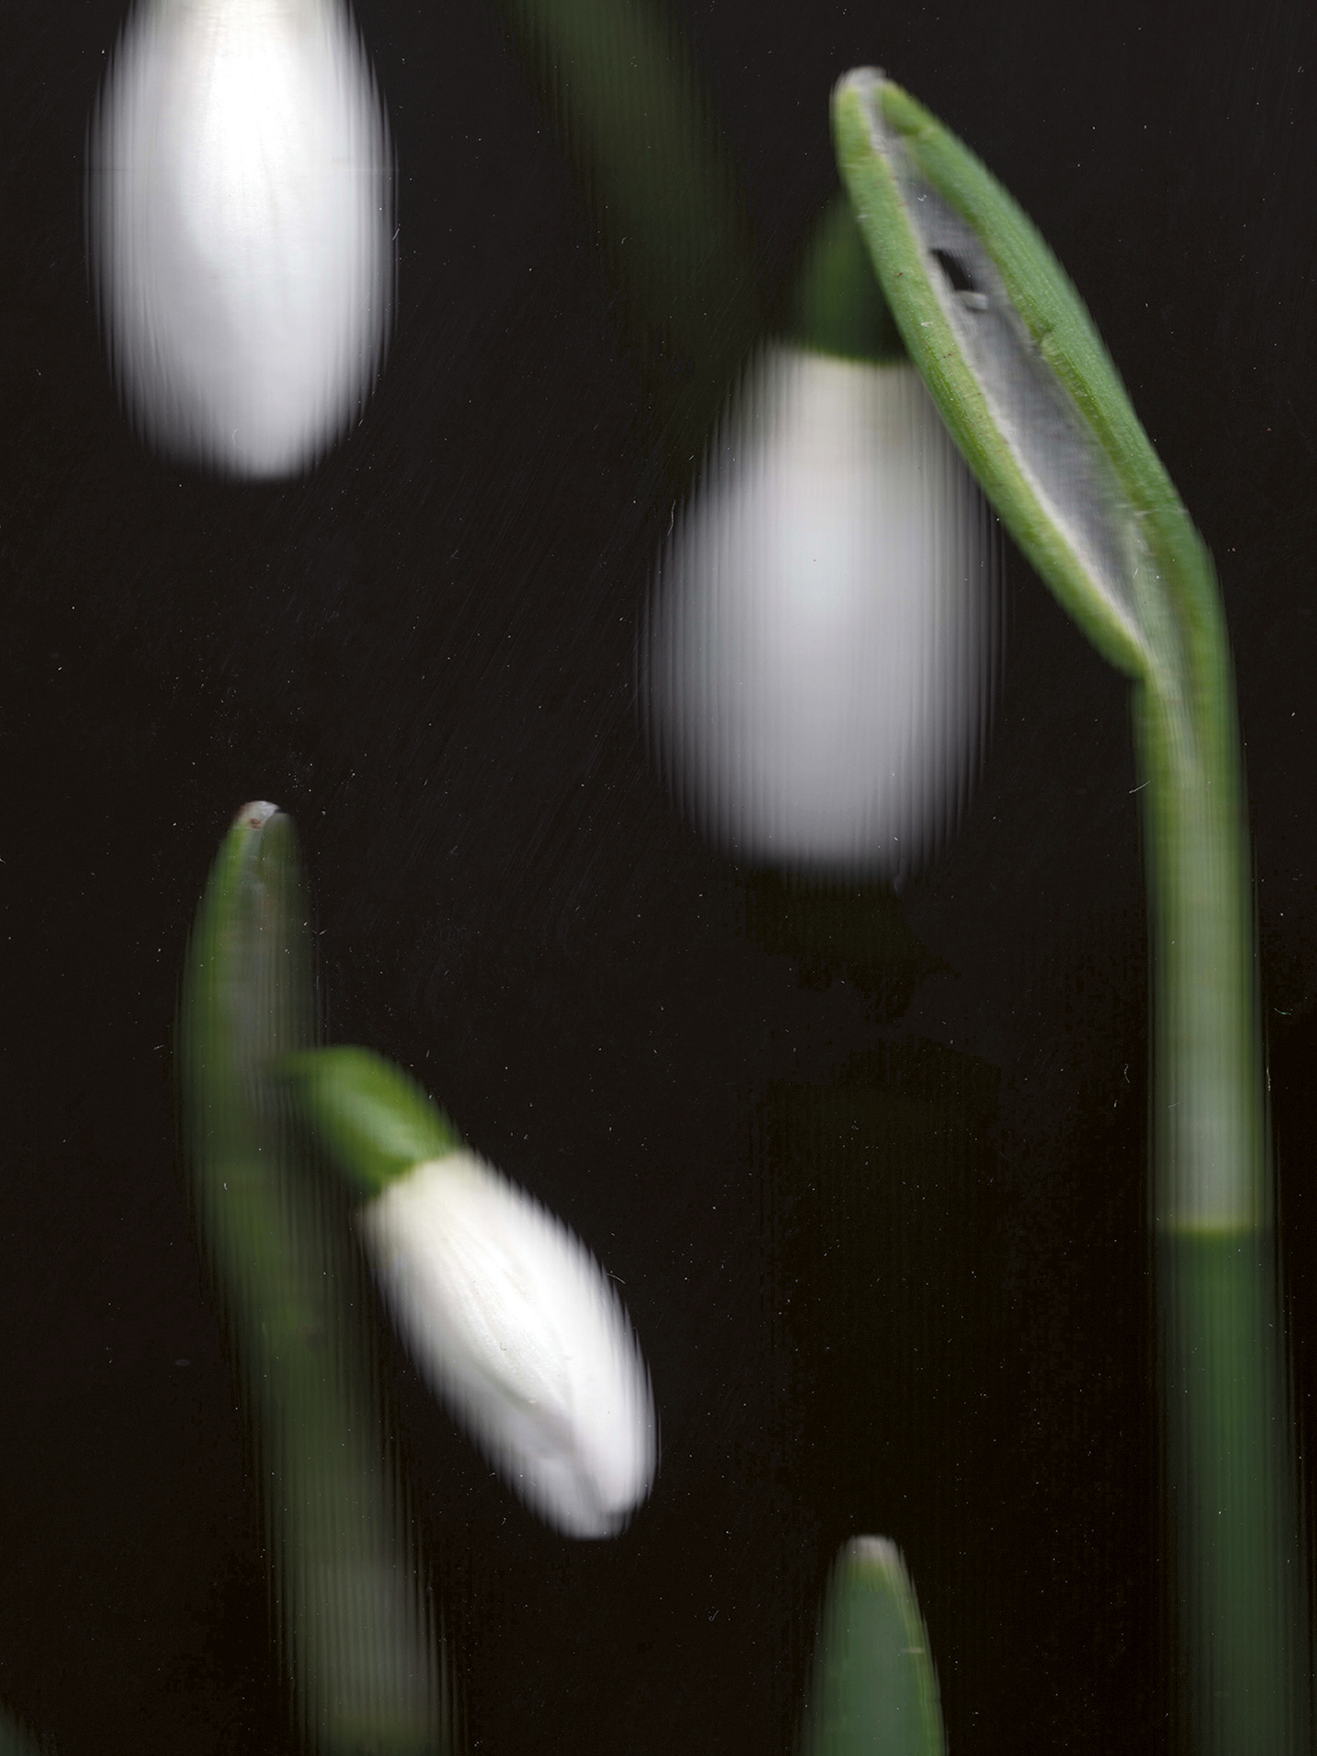 Galanthus nivalis (Snowdrop)